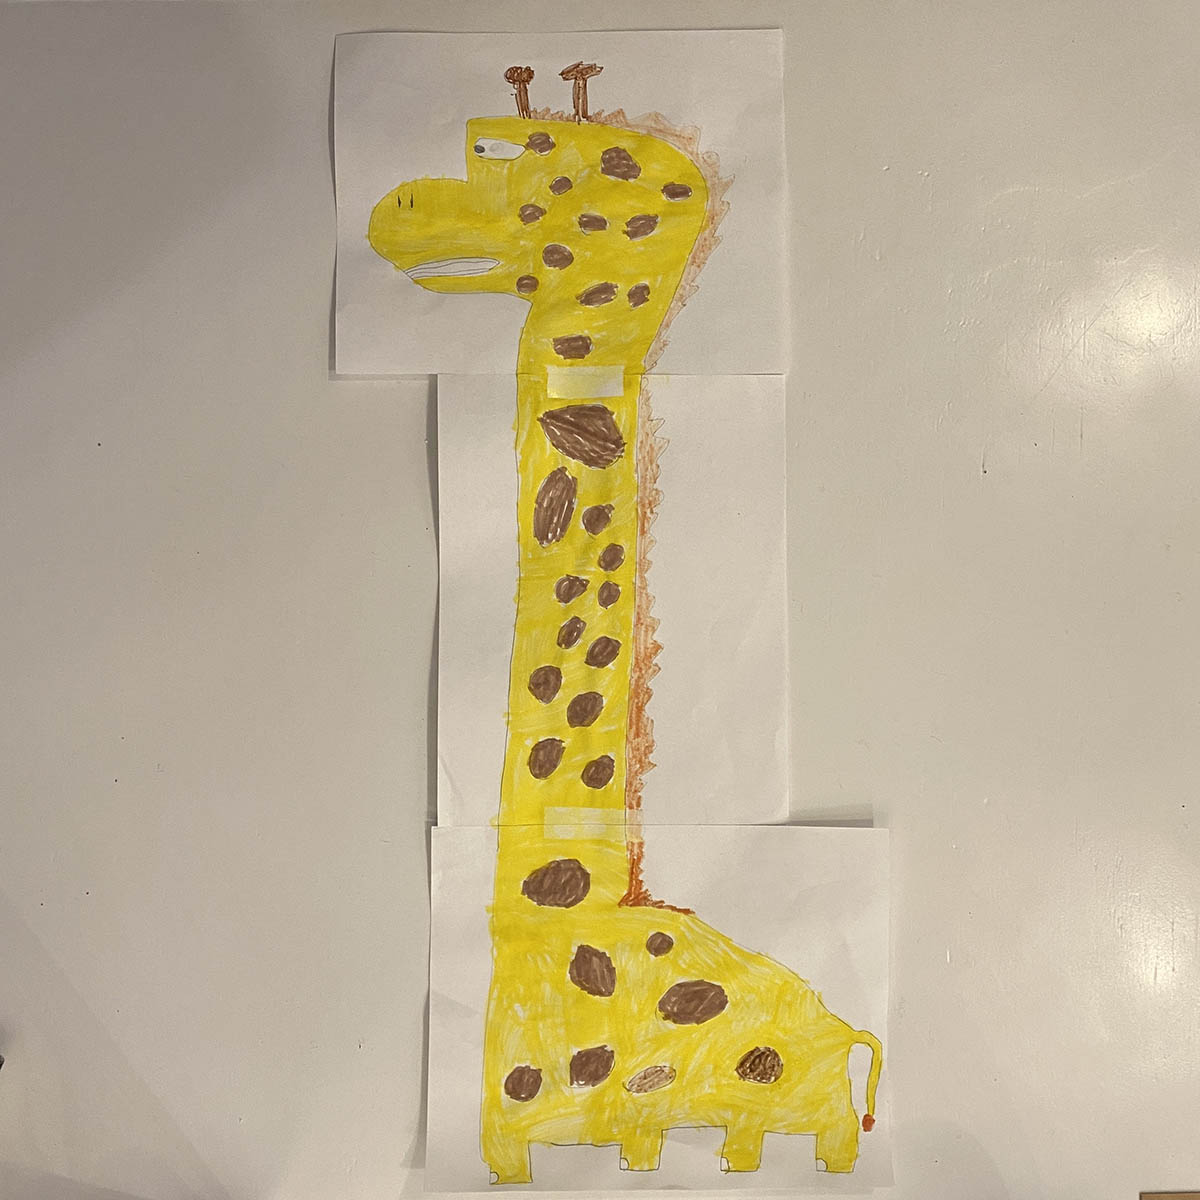 Kids drawing of a giraffe